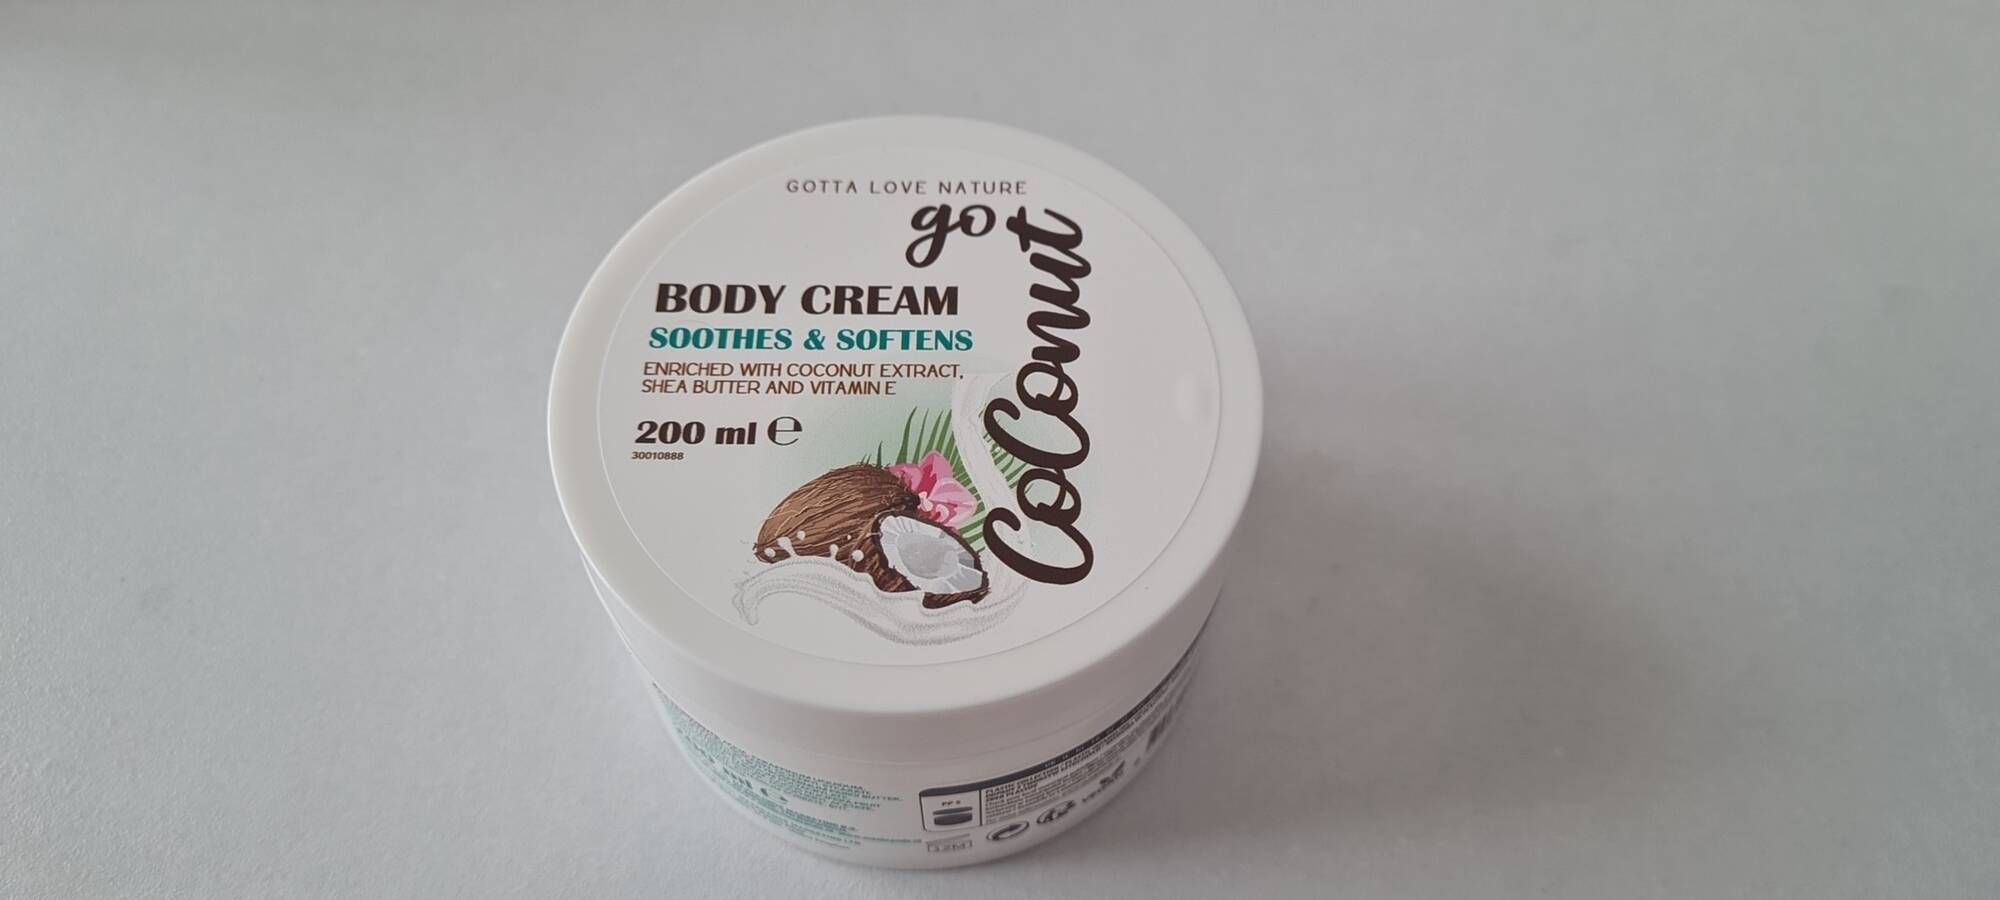 GOTTA LOVE NATURE - Go coconut  - Body cream soothes & softens